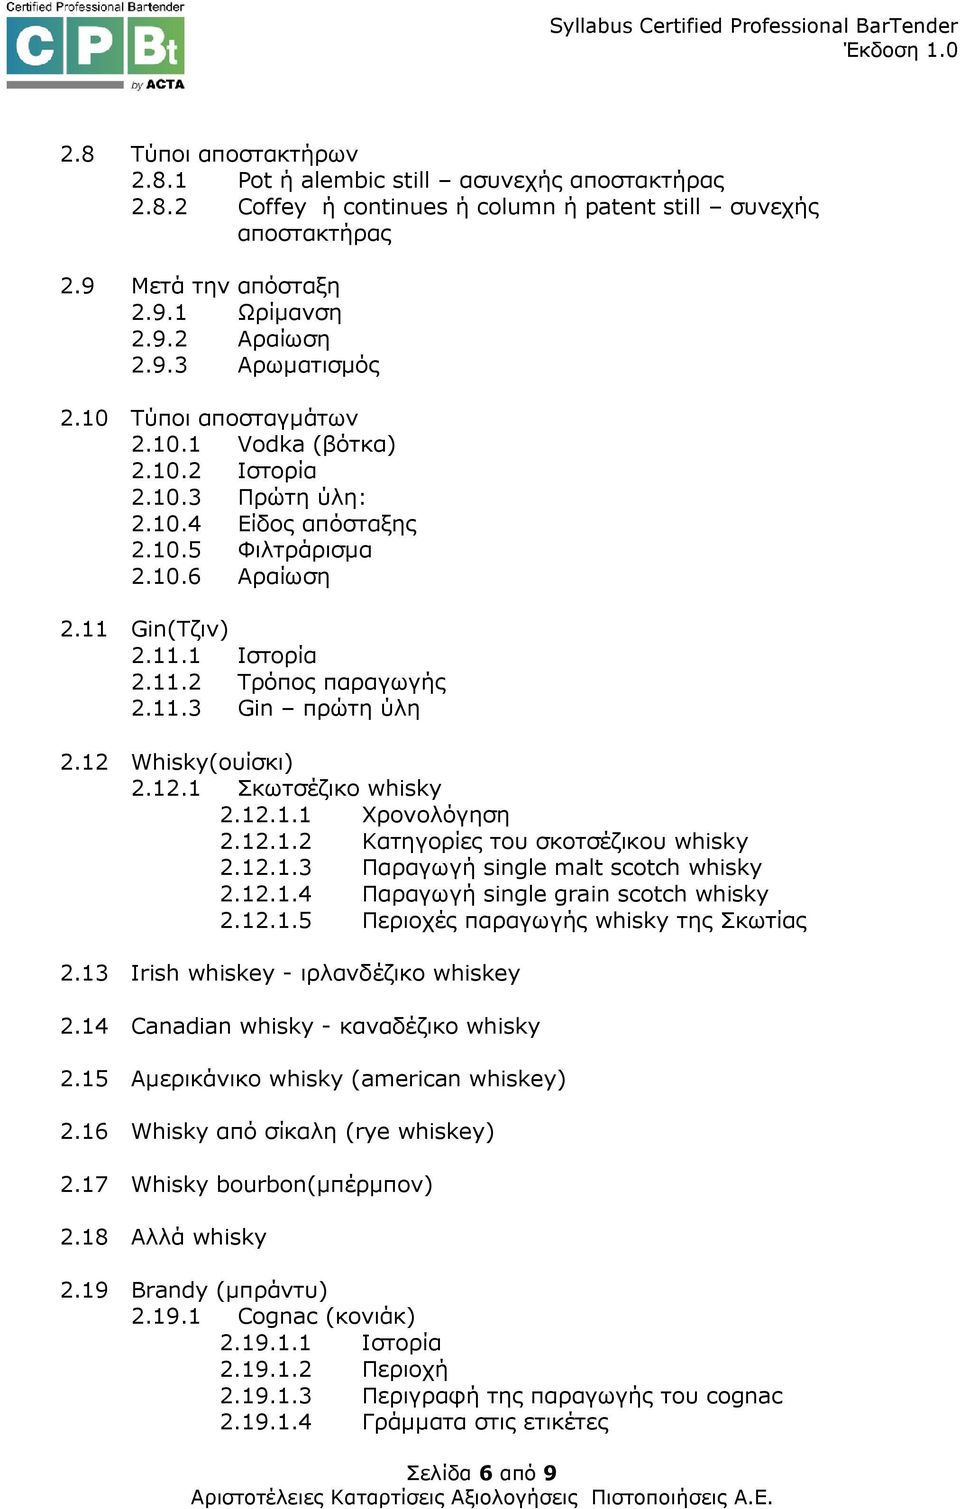 12 Whisky(ουίσκι) 2.12.1 Σκωτσέζικο whisky 2.12.1.1 Χρονολόγηση 2.12.1.2 Κατηγορίες του σκοτσέζικου whisky 2.12.1.3 Παραγωγή single malt scotch whisky 2.12.1.4 Παραγωγή single grain scotch whisky 2.